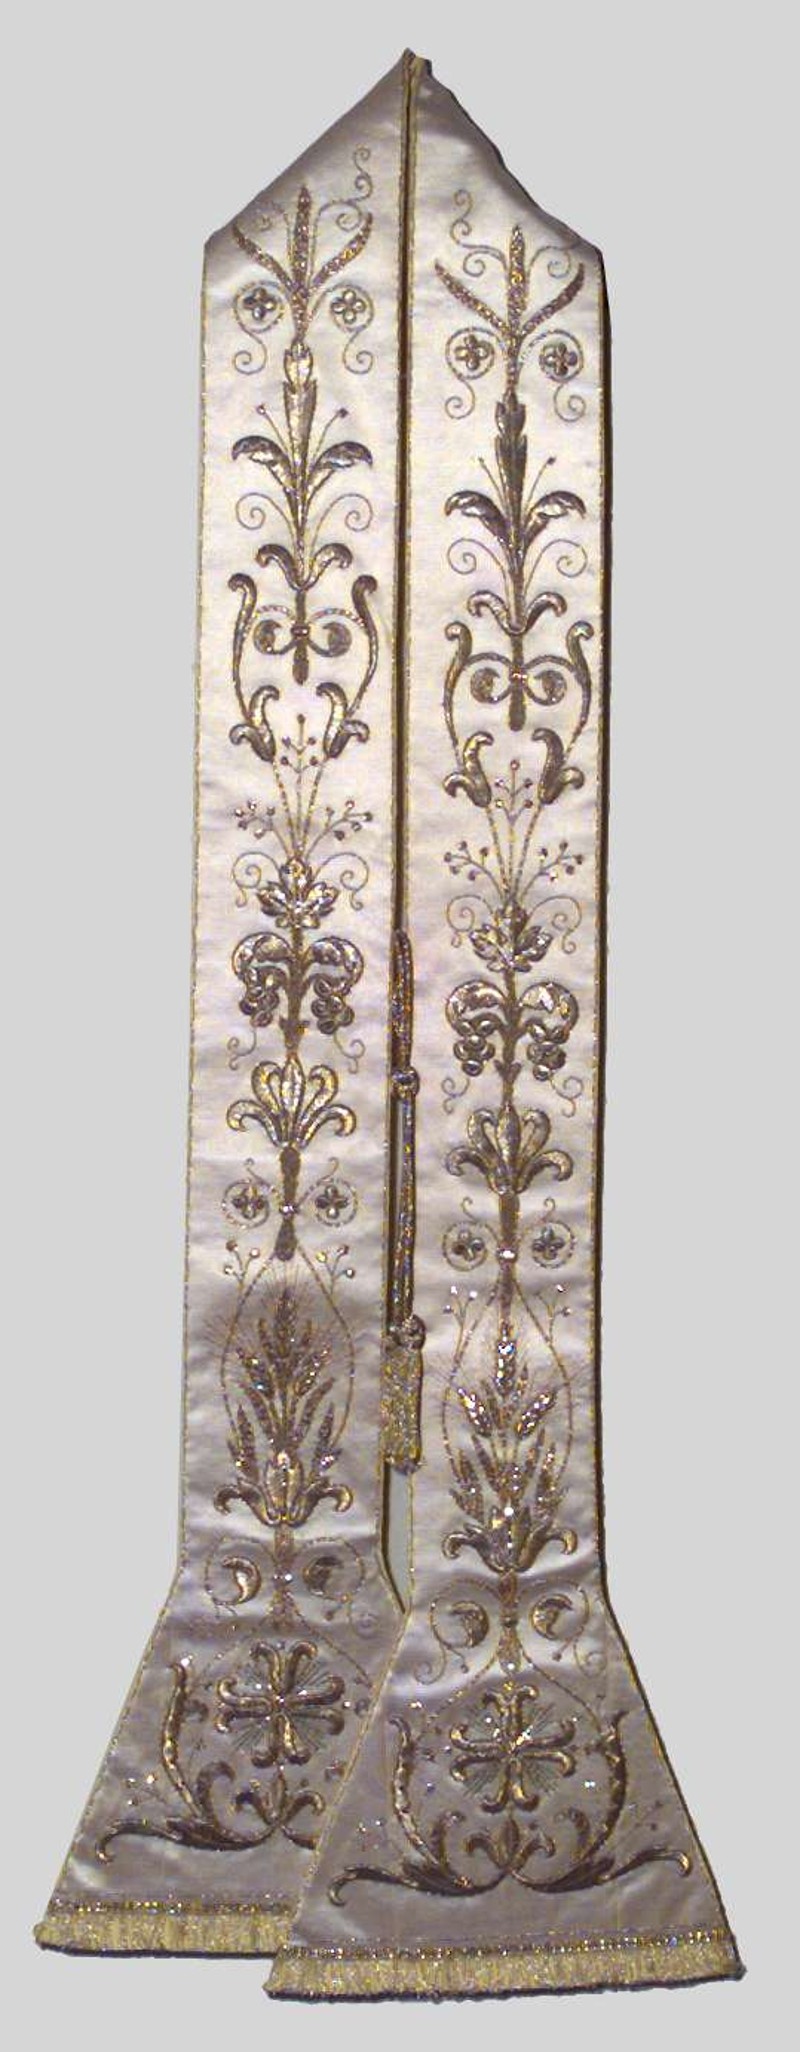 Manifattura italiana sec. XIX, Stola in raso bianco ricamato in filo d'oro